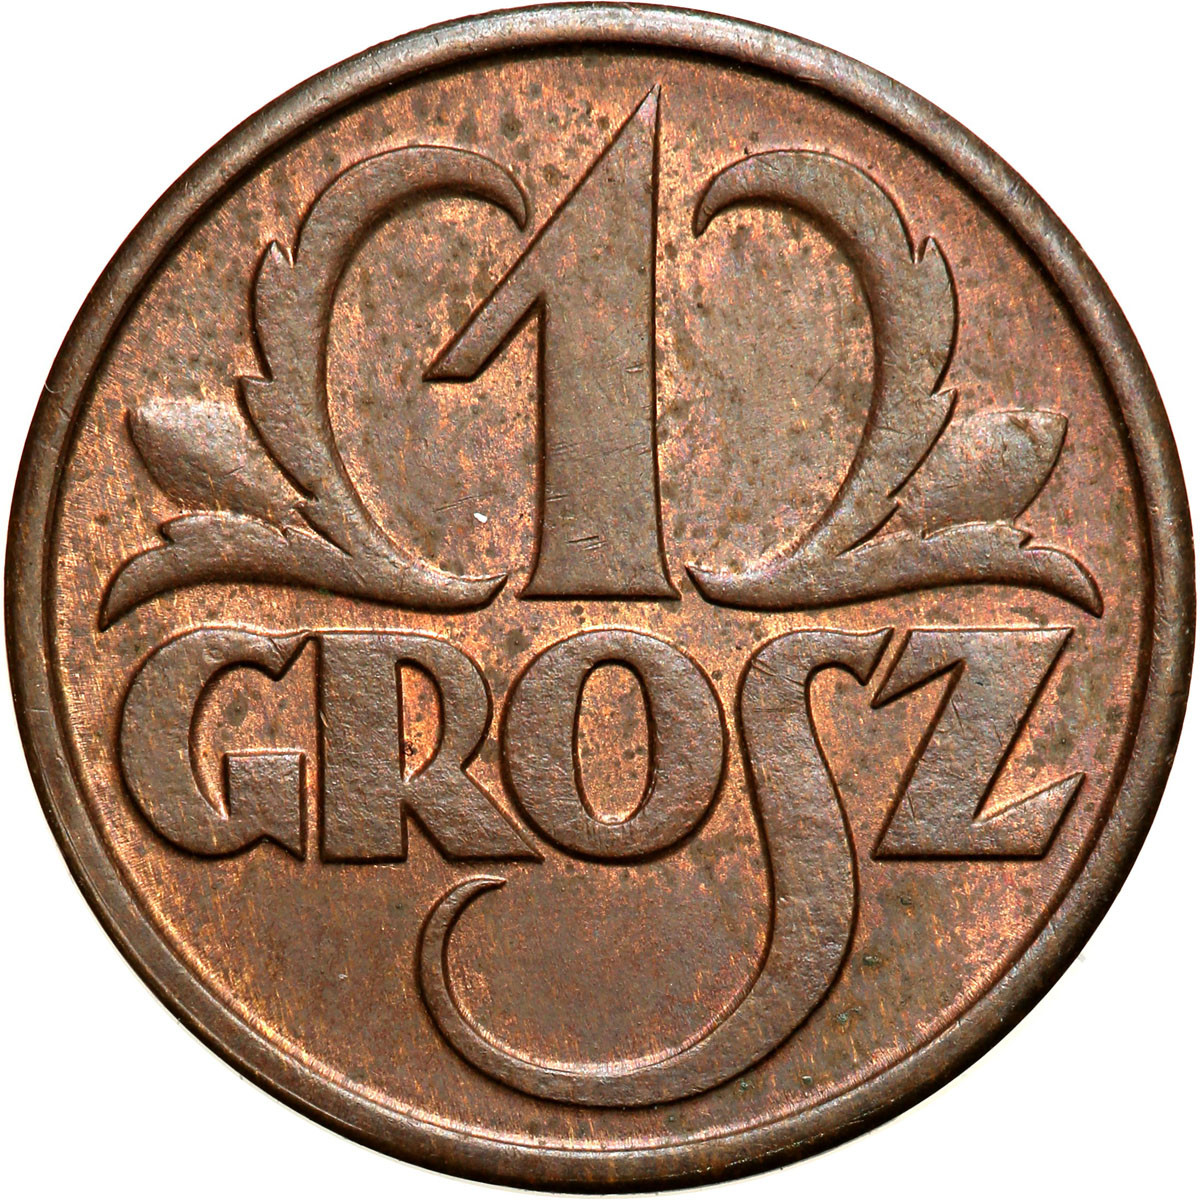 II RP. 1 grosz 1931